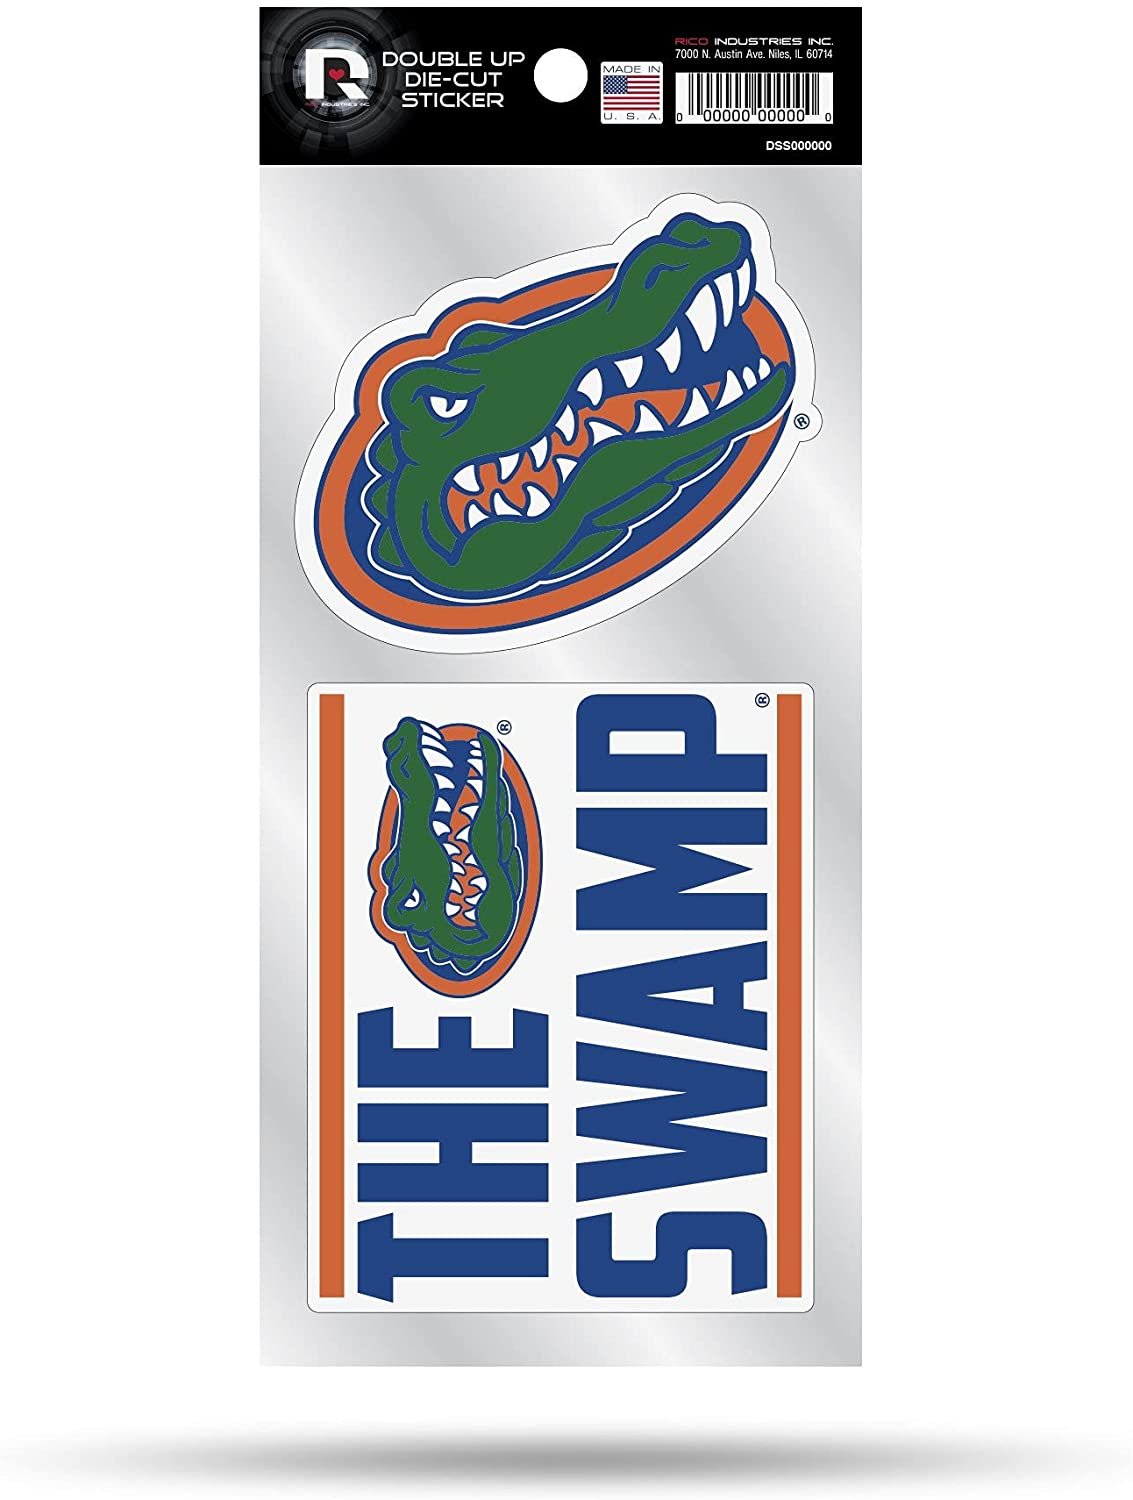 University of Florida Gators 2-Piece Double Up Die Cut Sticker Decal Sheet, 4x8 Inch